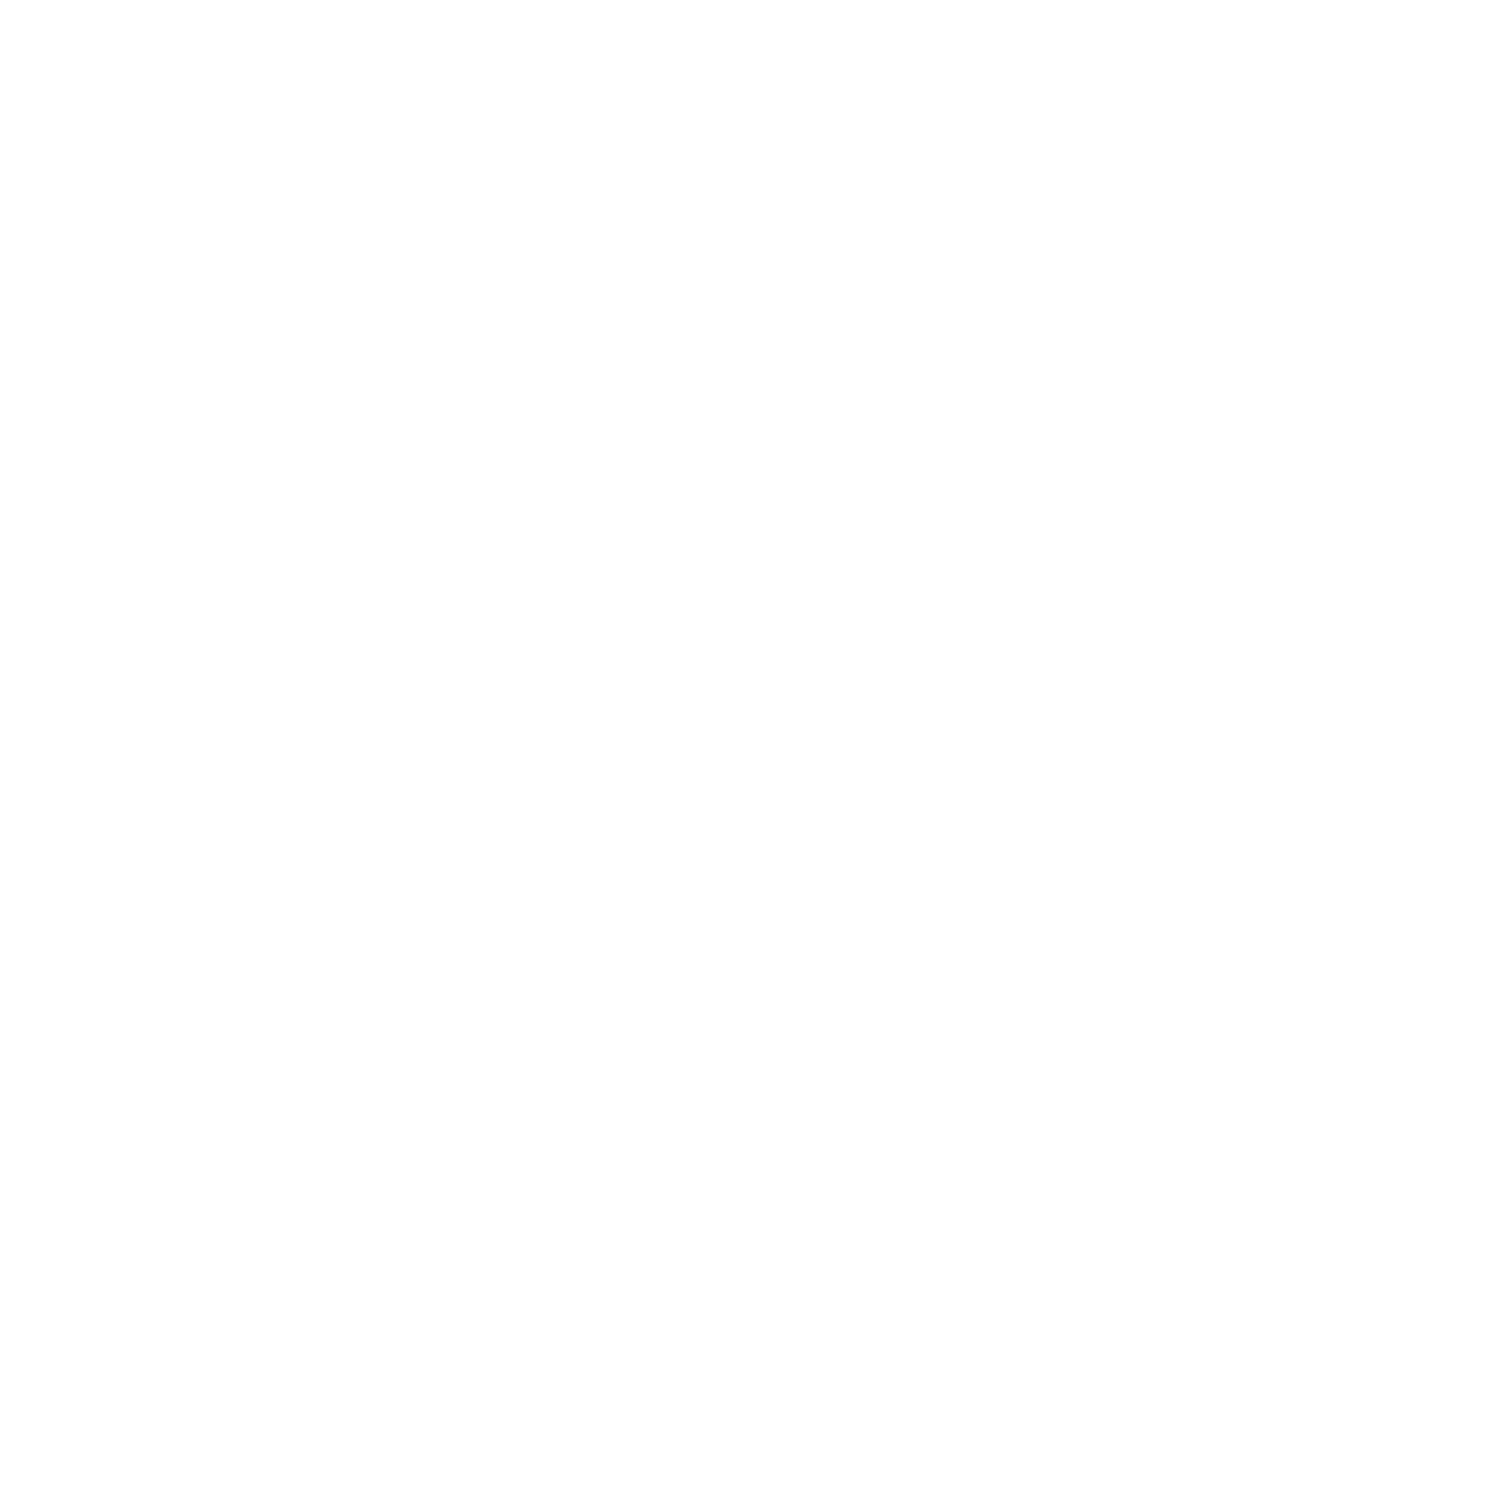 Heights Community